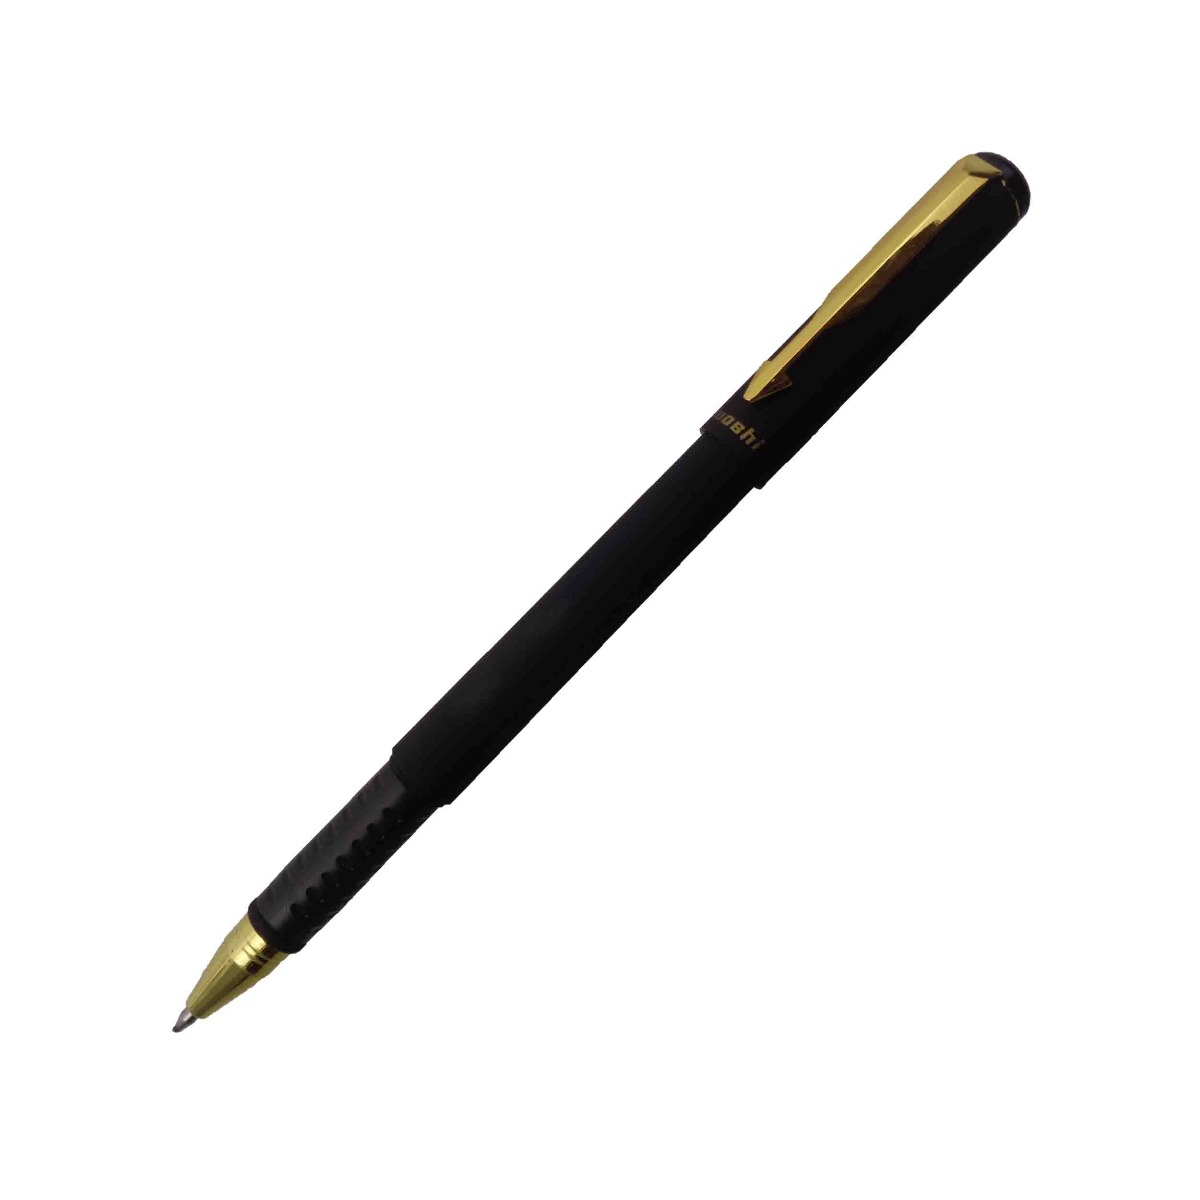 Luoshi GP2073A Model: 15523 Black color body with golden clip 0.7mm tip Black ink cap type gel pen